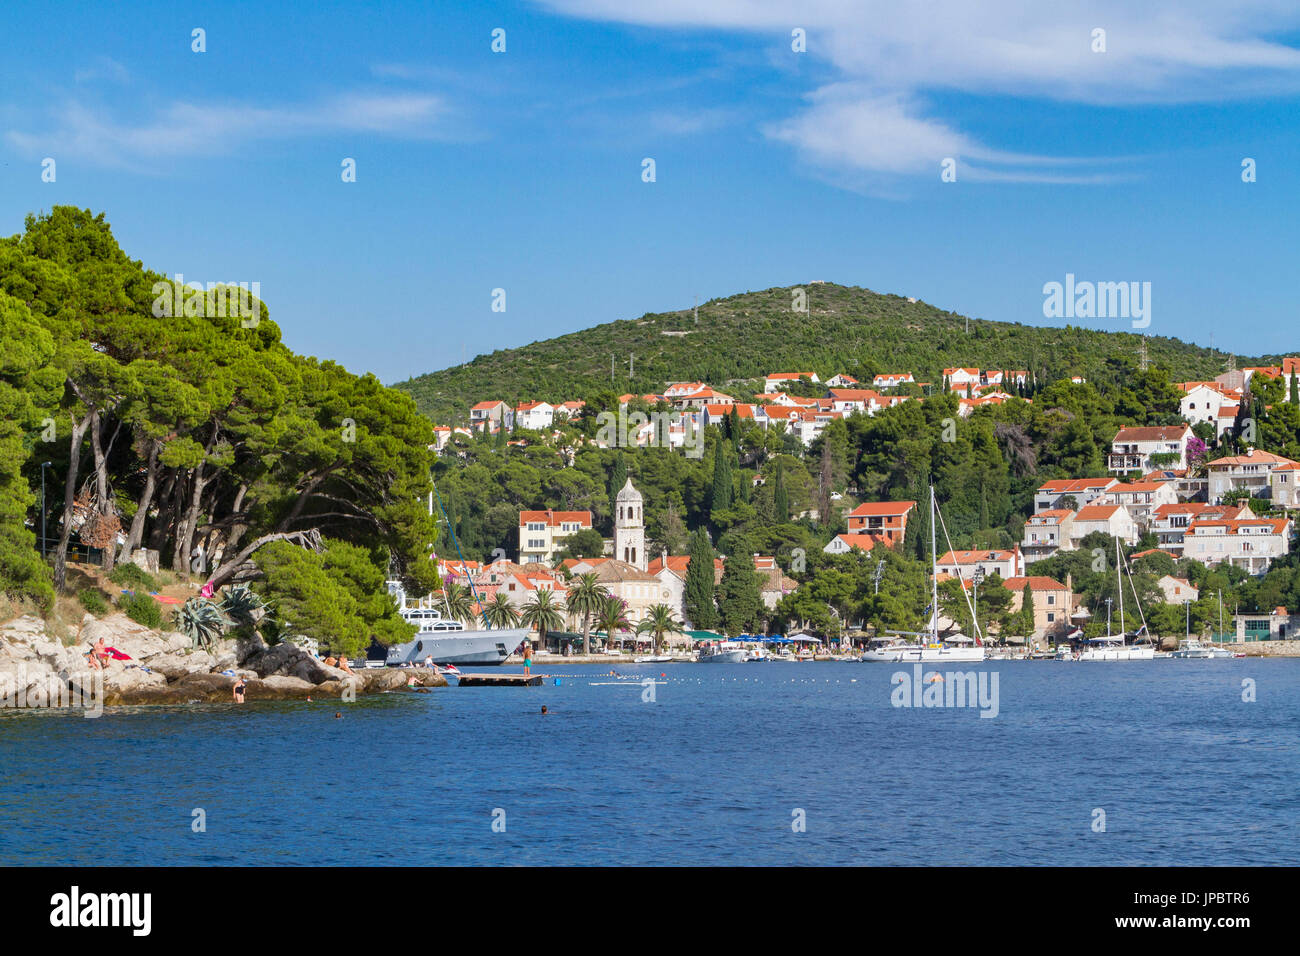 Cavtat village and harbor, view from the sea (Konavle, Dubrovnik, Dubrovnik-Neretva county, Dalmatia region, Croatia, Europe) Stock Photo